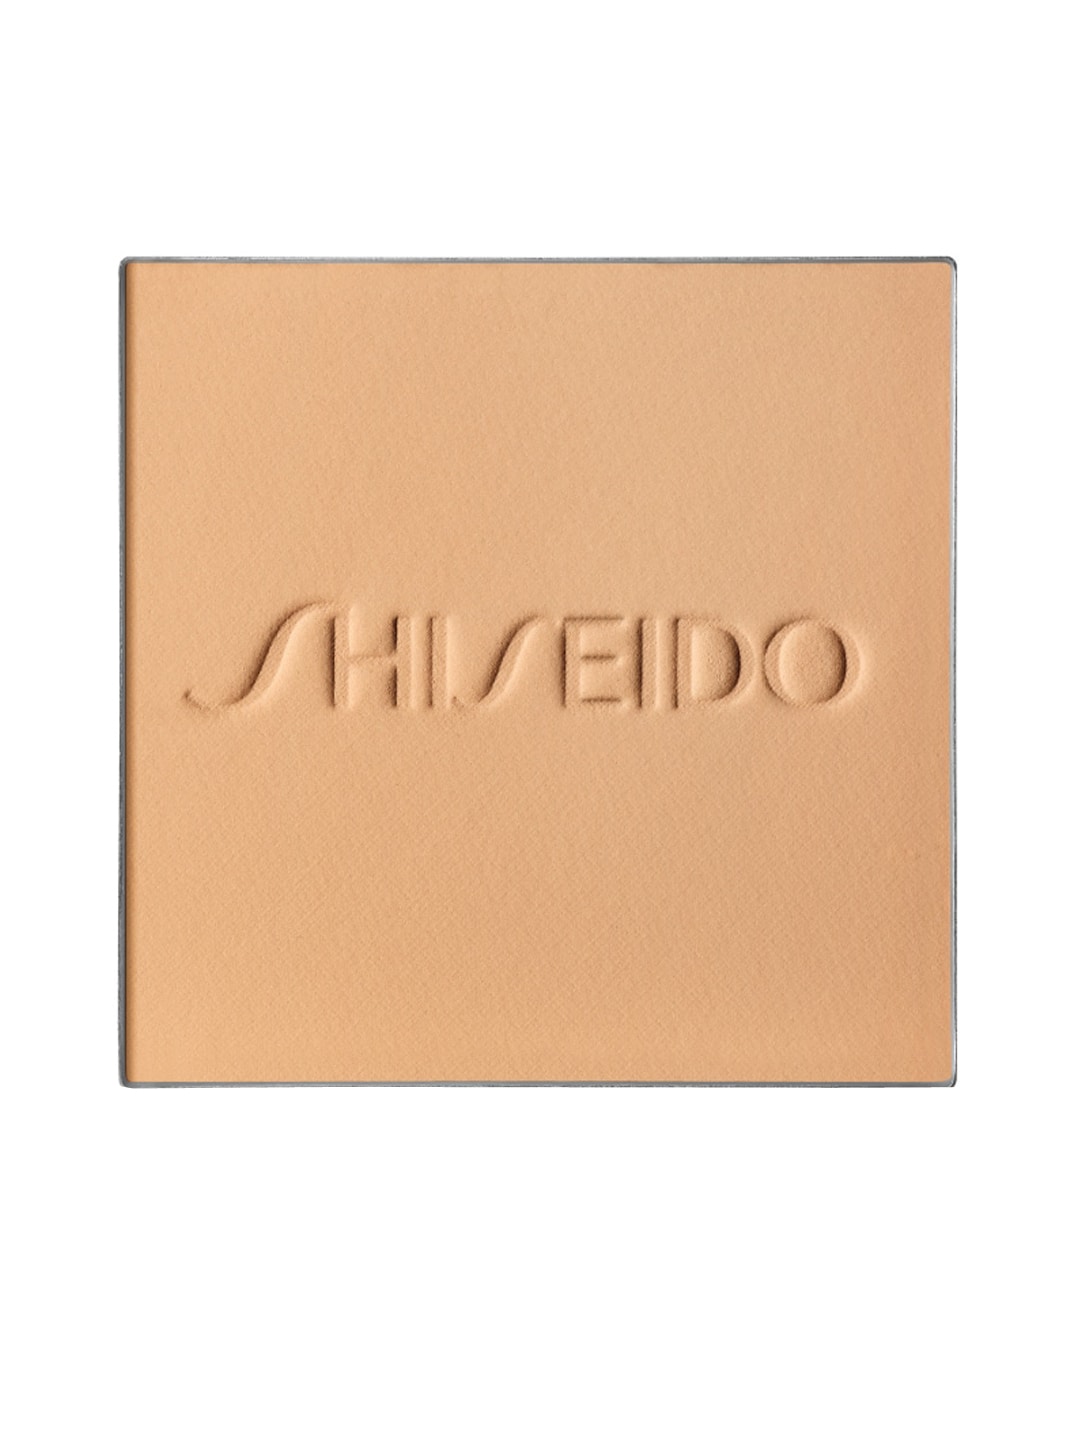 SHISEIDO Syncro Skin Self Refreshing Custom Finish Powder Foundation 160 Shell - 9 g Price in India